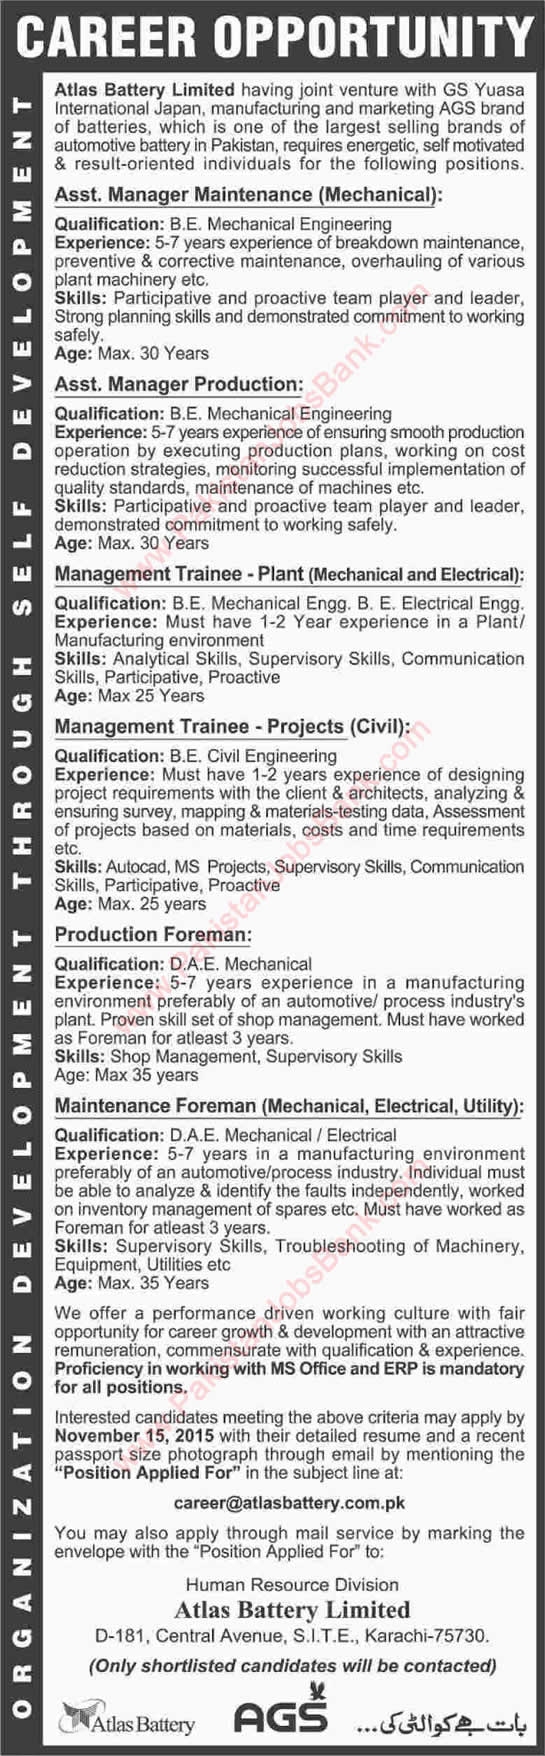 Atlas Battery Karachi Jobs 2015 November Mechanical / Civil / Electrical Engineers & Management Trainees